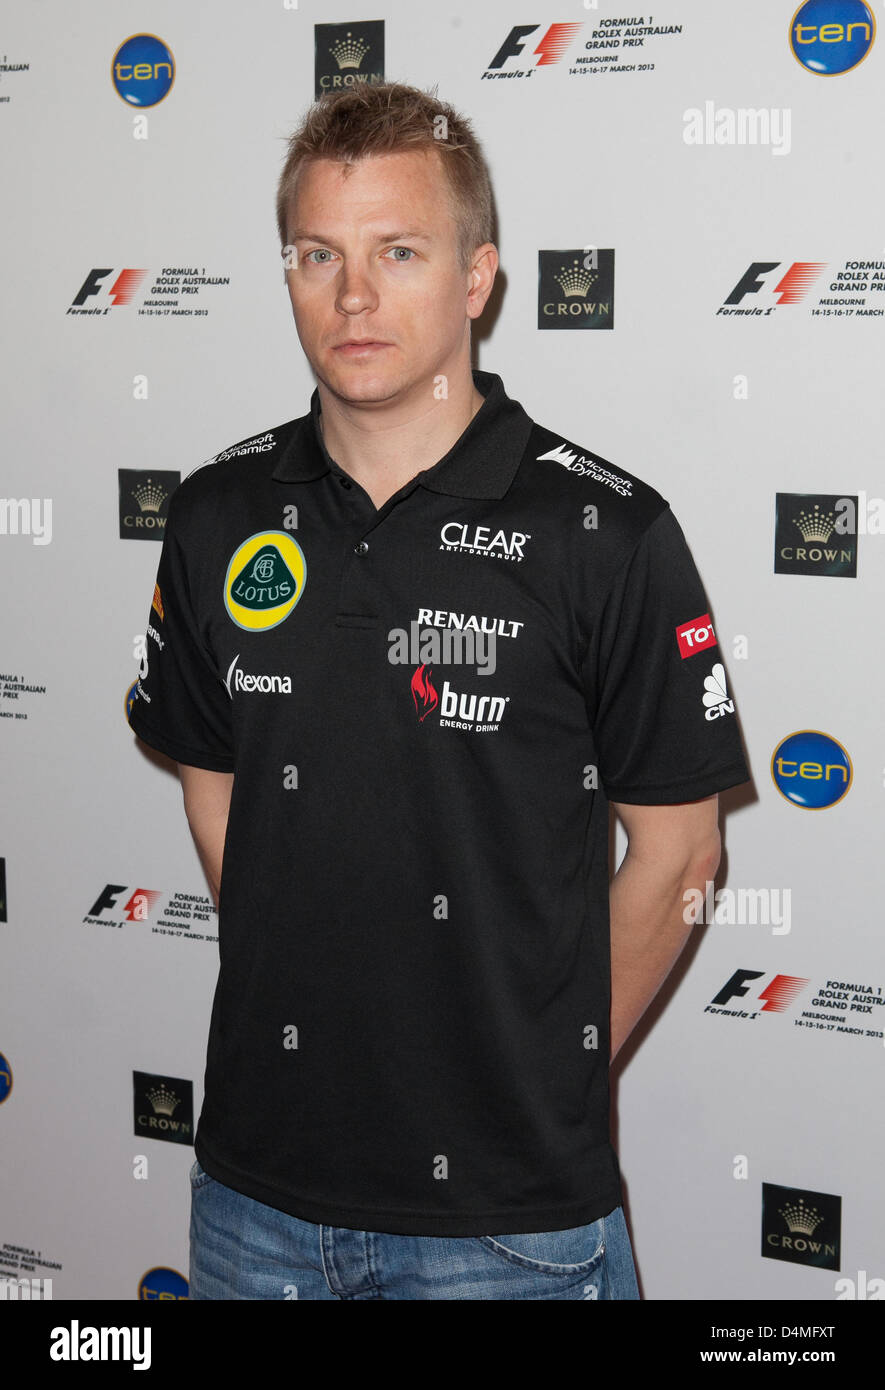 Melbourne, Australia. March 16, 2013. Kimi Raikkonen at the Grand Prix Breakfast, Crown, Melbourne. Stock Photo